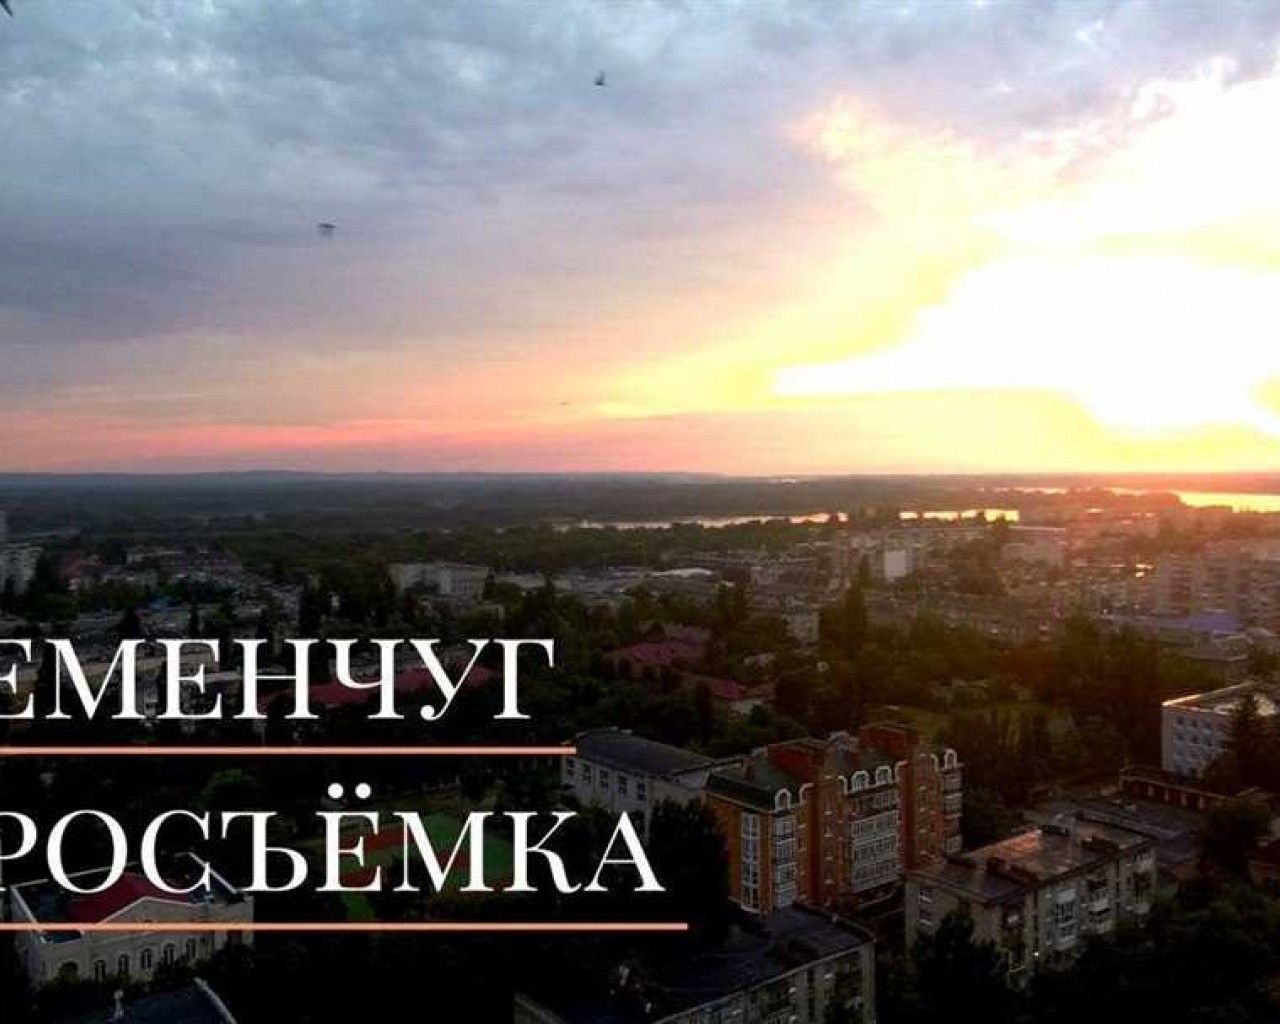 Климат города Кременок: особенности и прогноз